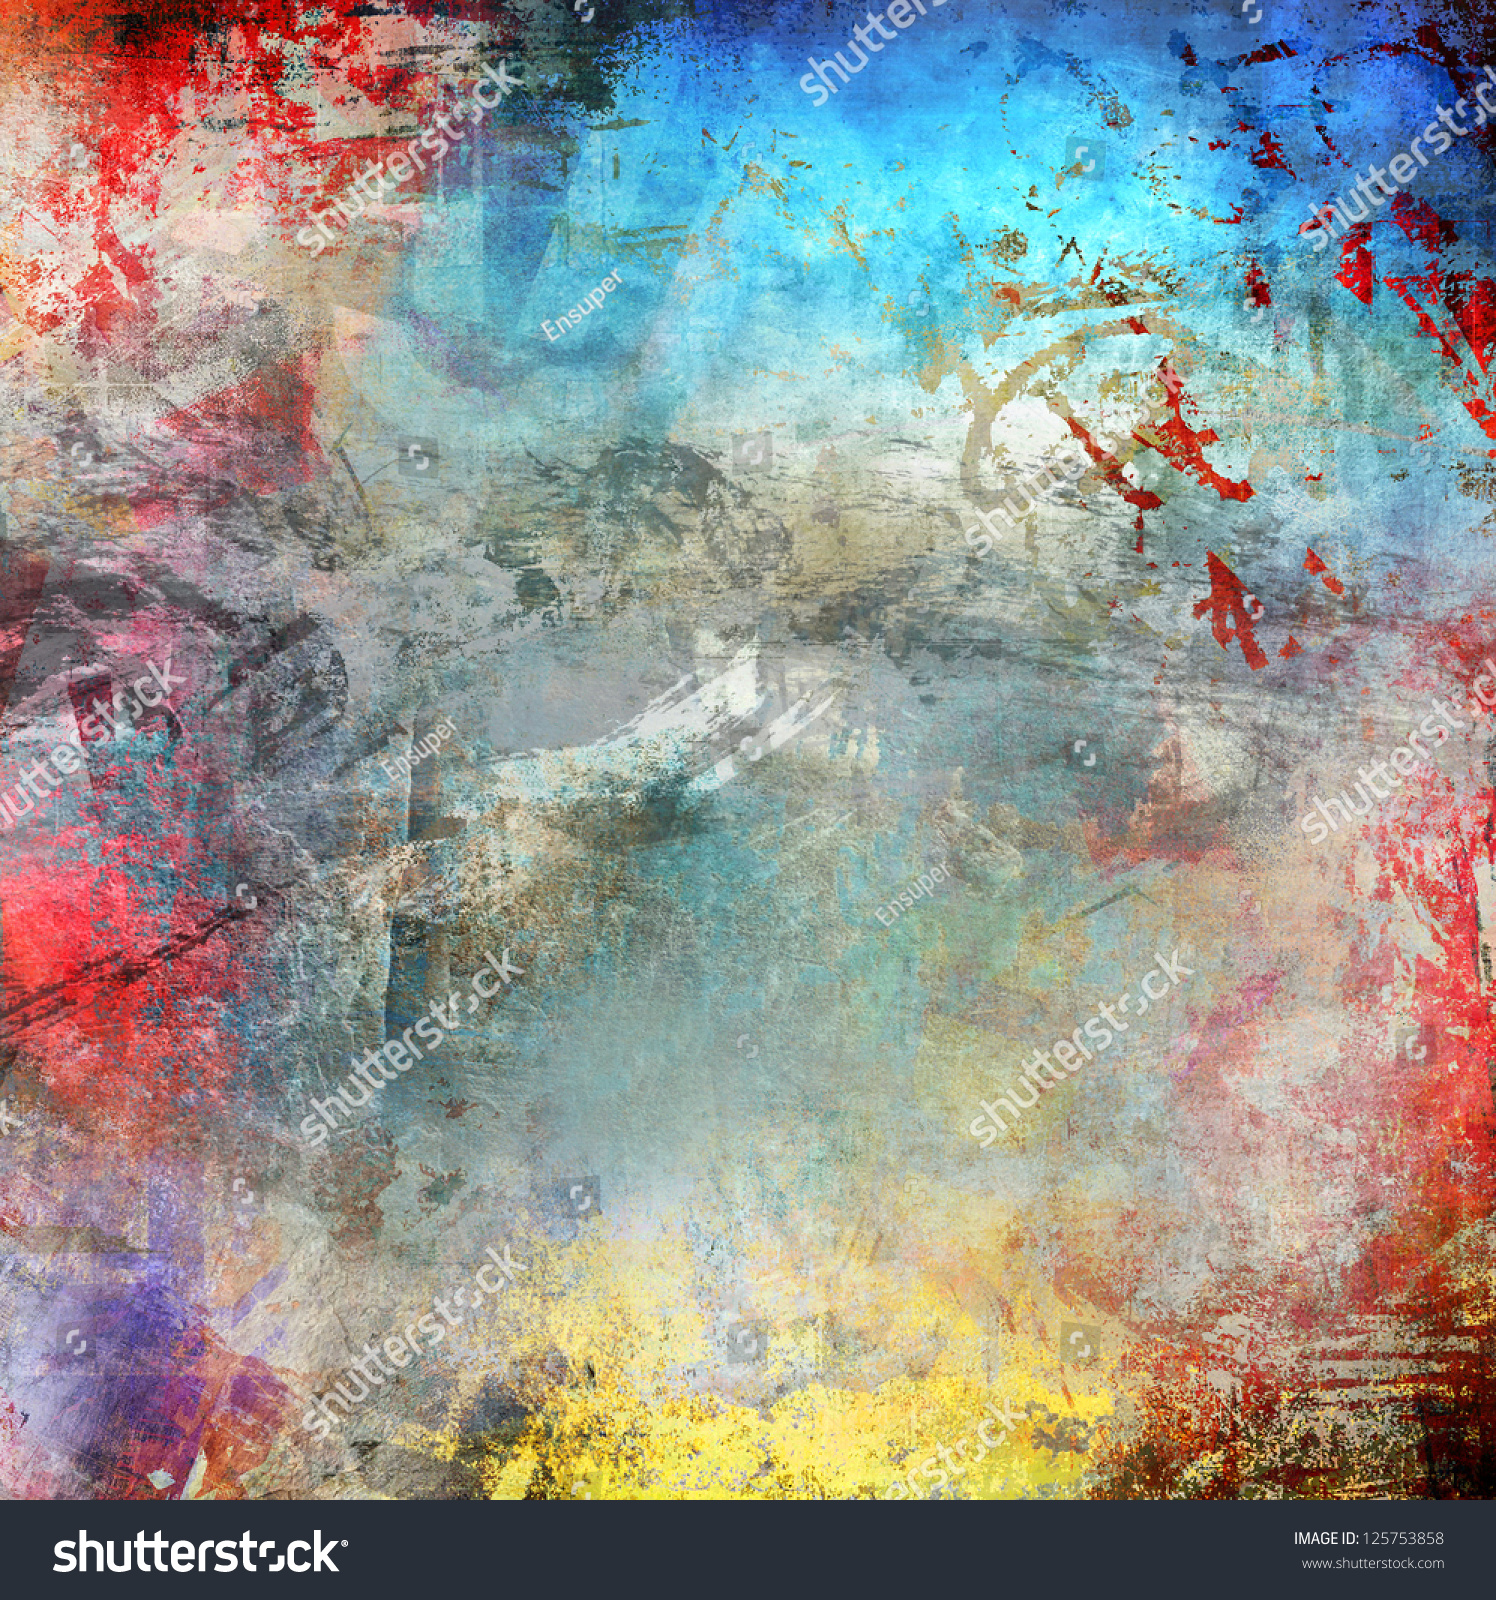 Abstract Grunge Illustration, Art Background - 125753858 : Shutterstock